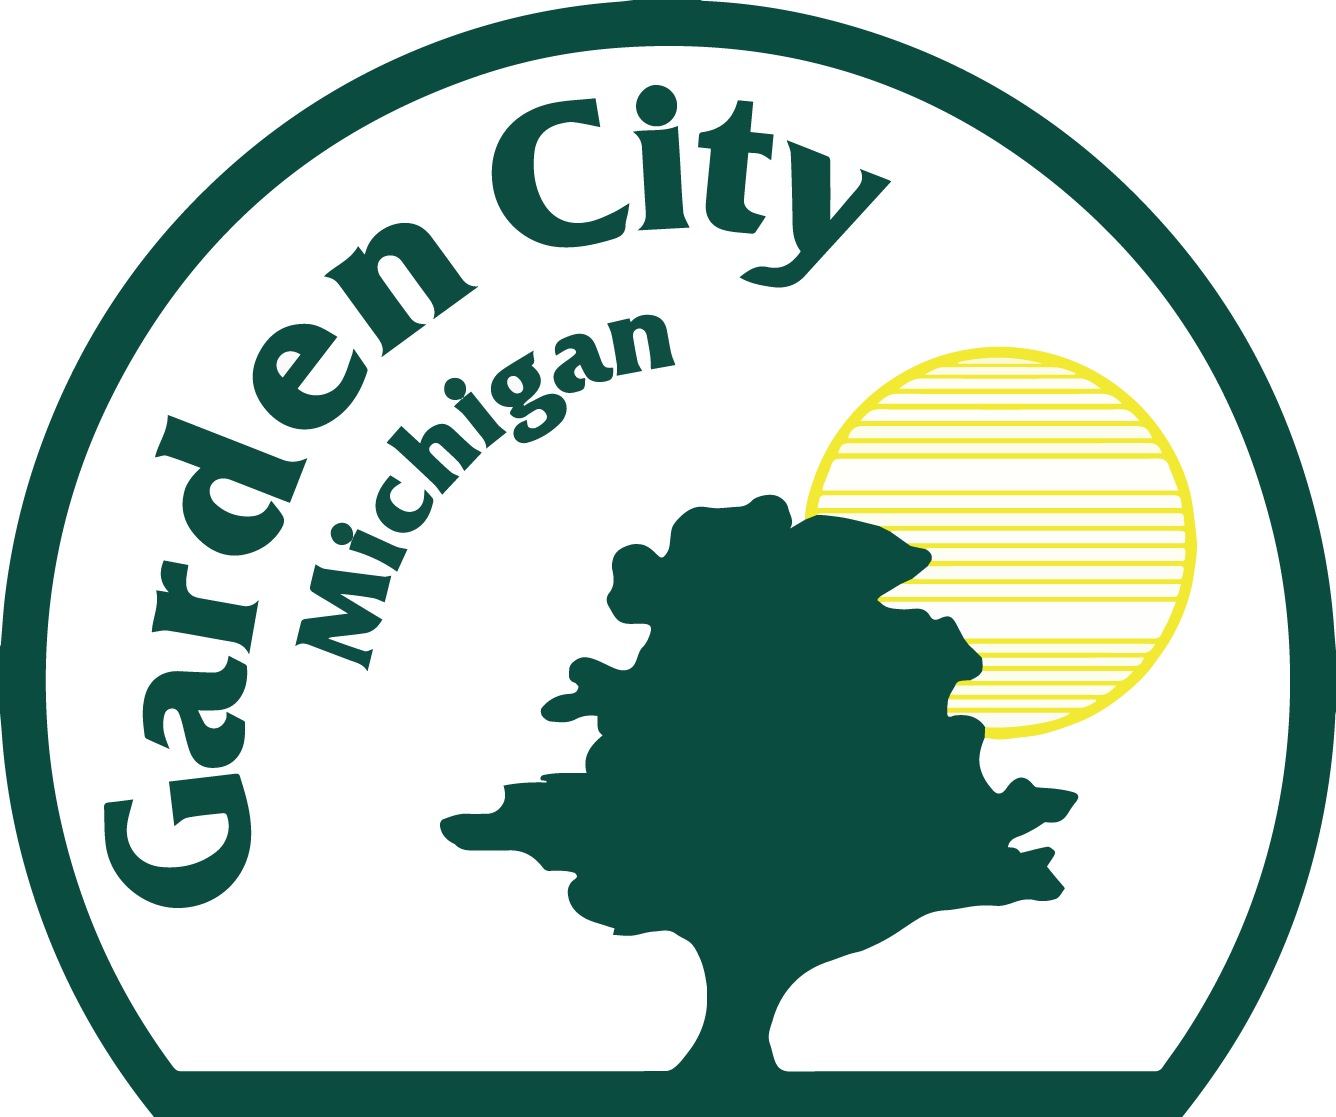 Organization logo of City of Garden City